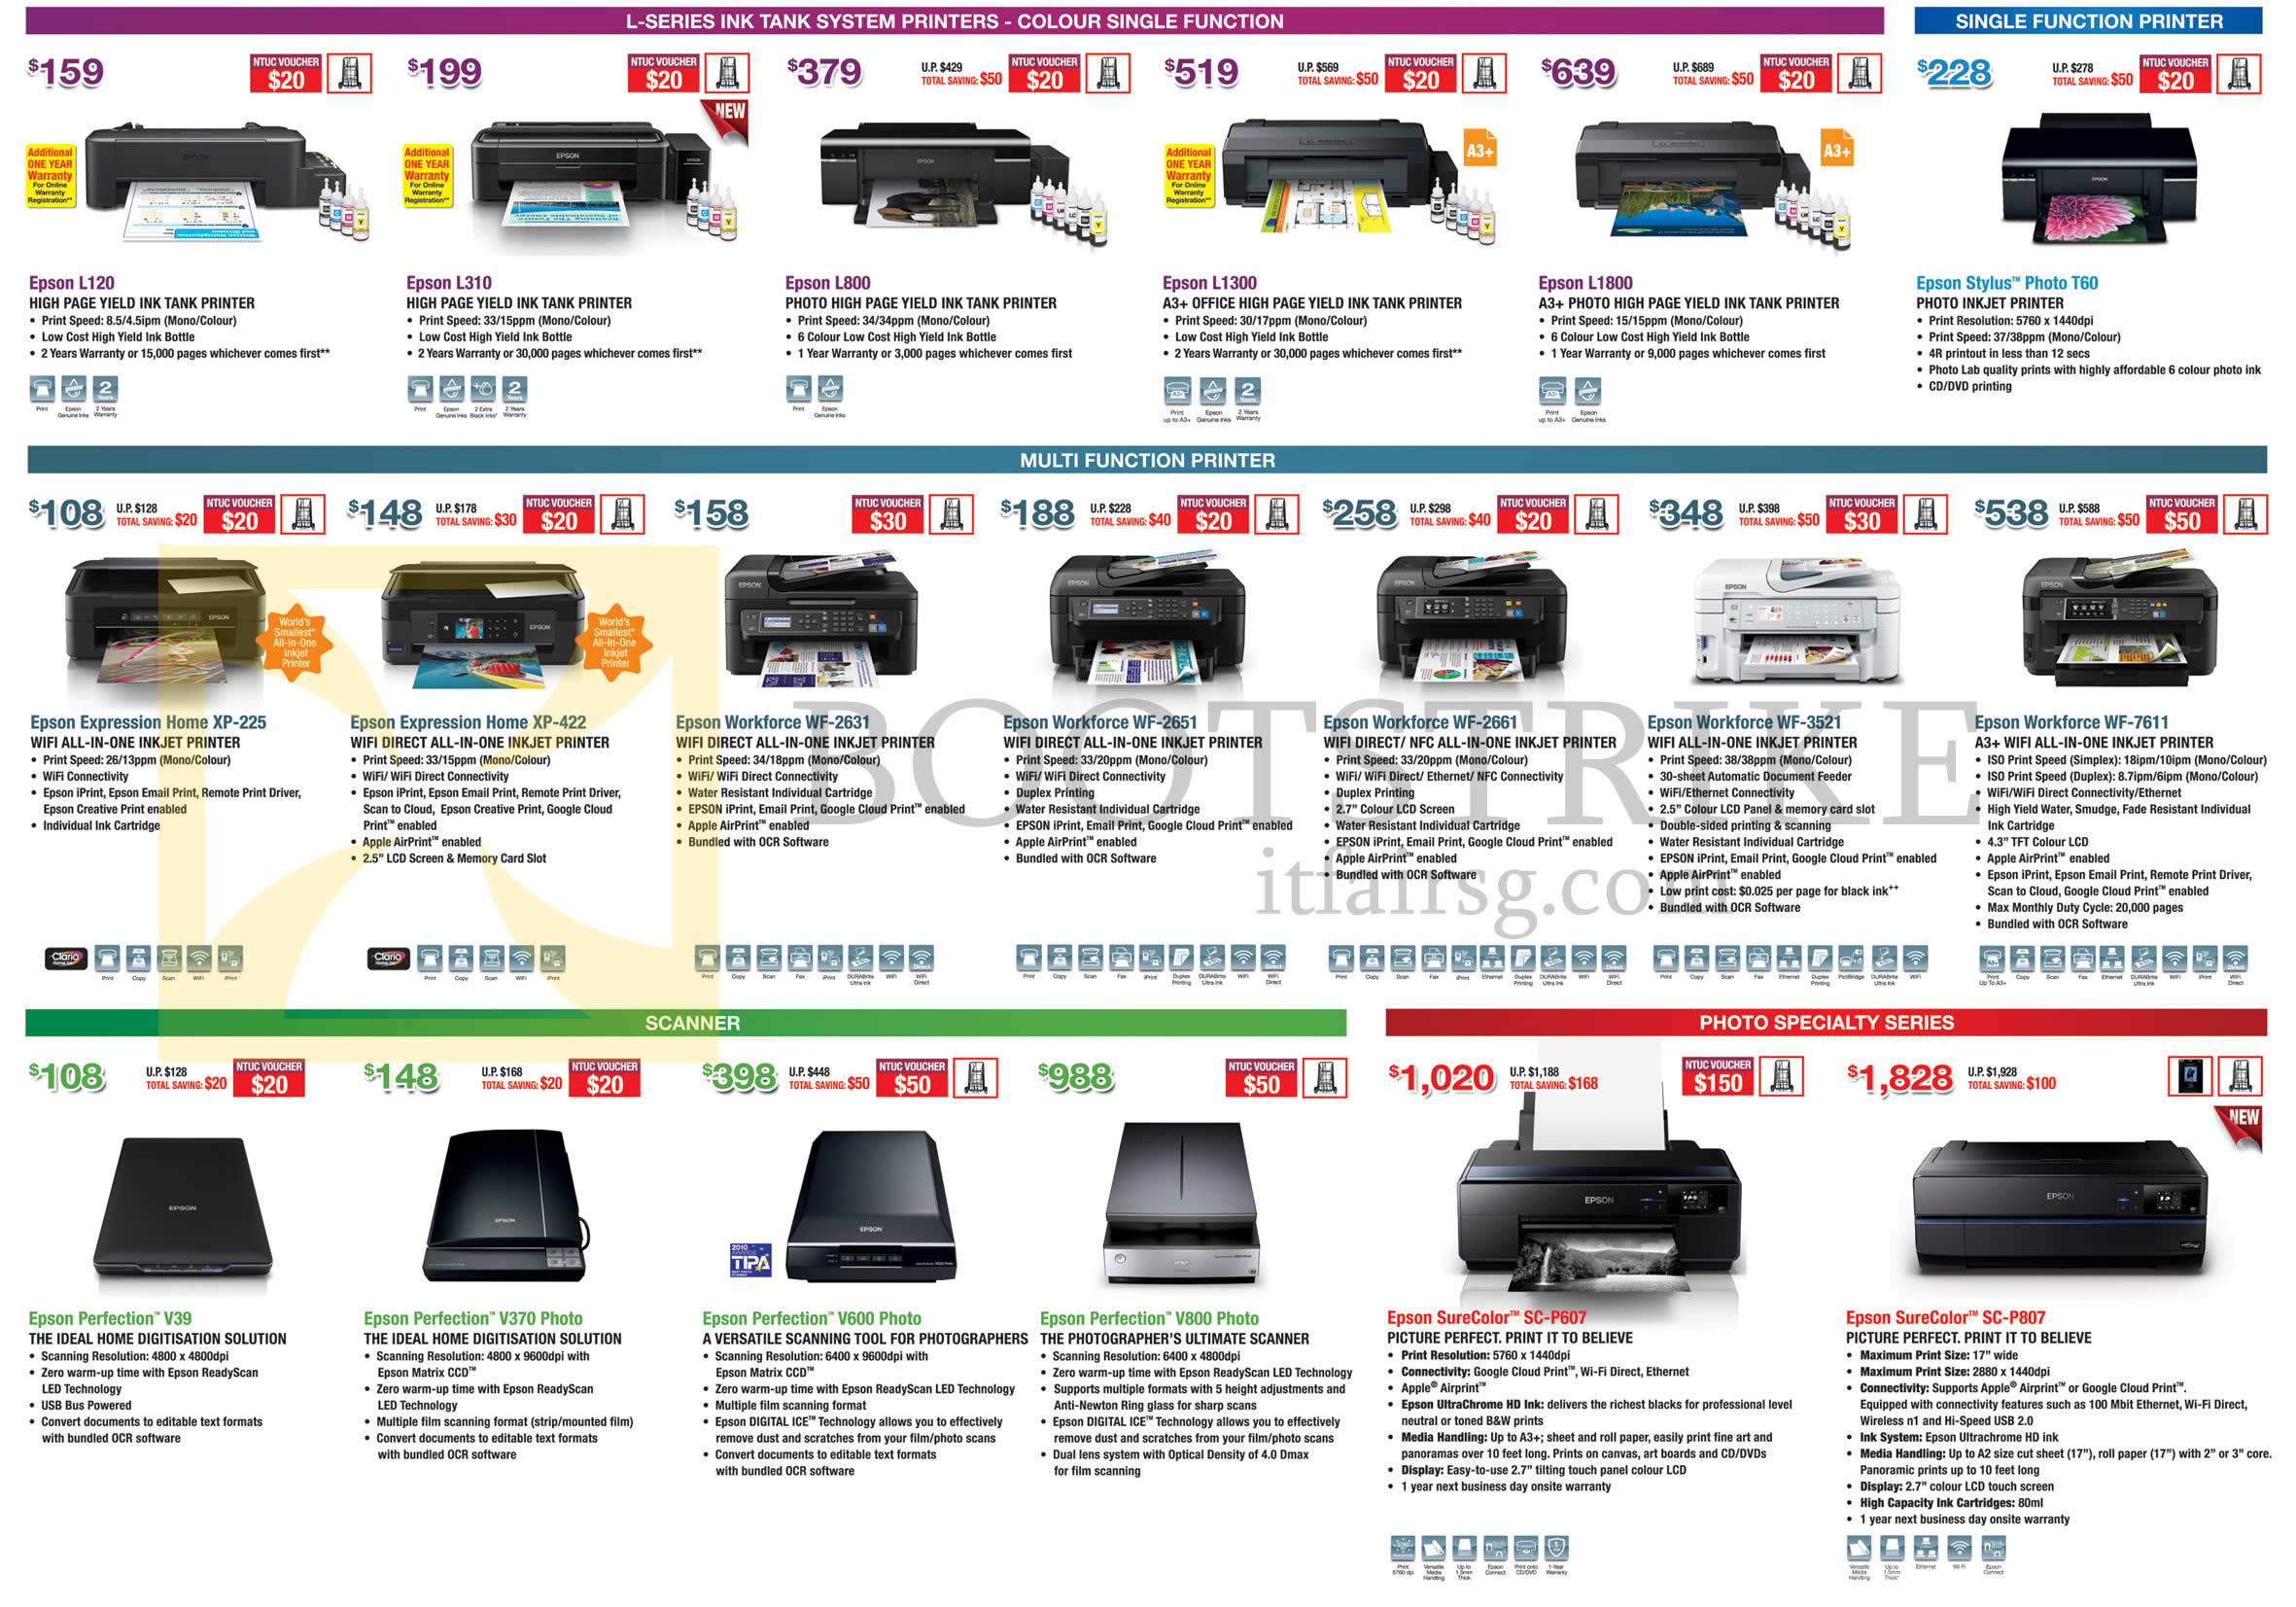 COMEX 2015 price list image brochure of Epson Printers, Scanners, Photo Printers, L120, L310, L800, L1300, L1800, T60, XP-225, XP-422, WF-2651, WF-2631, WF-2661, WF-3521, V600 Photo, V800 Photo